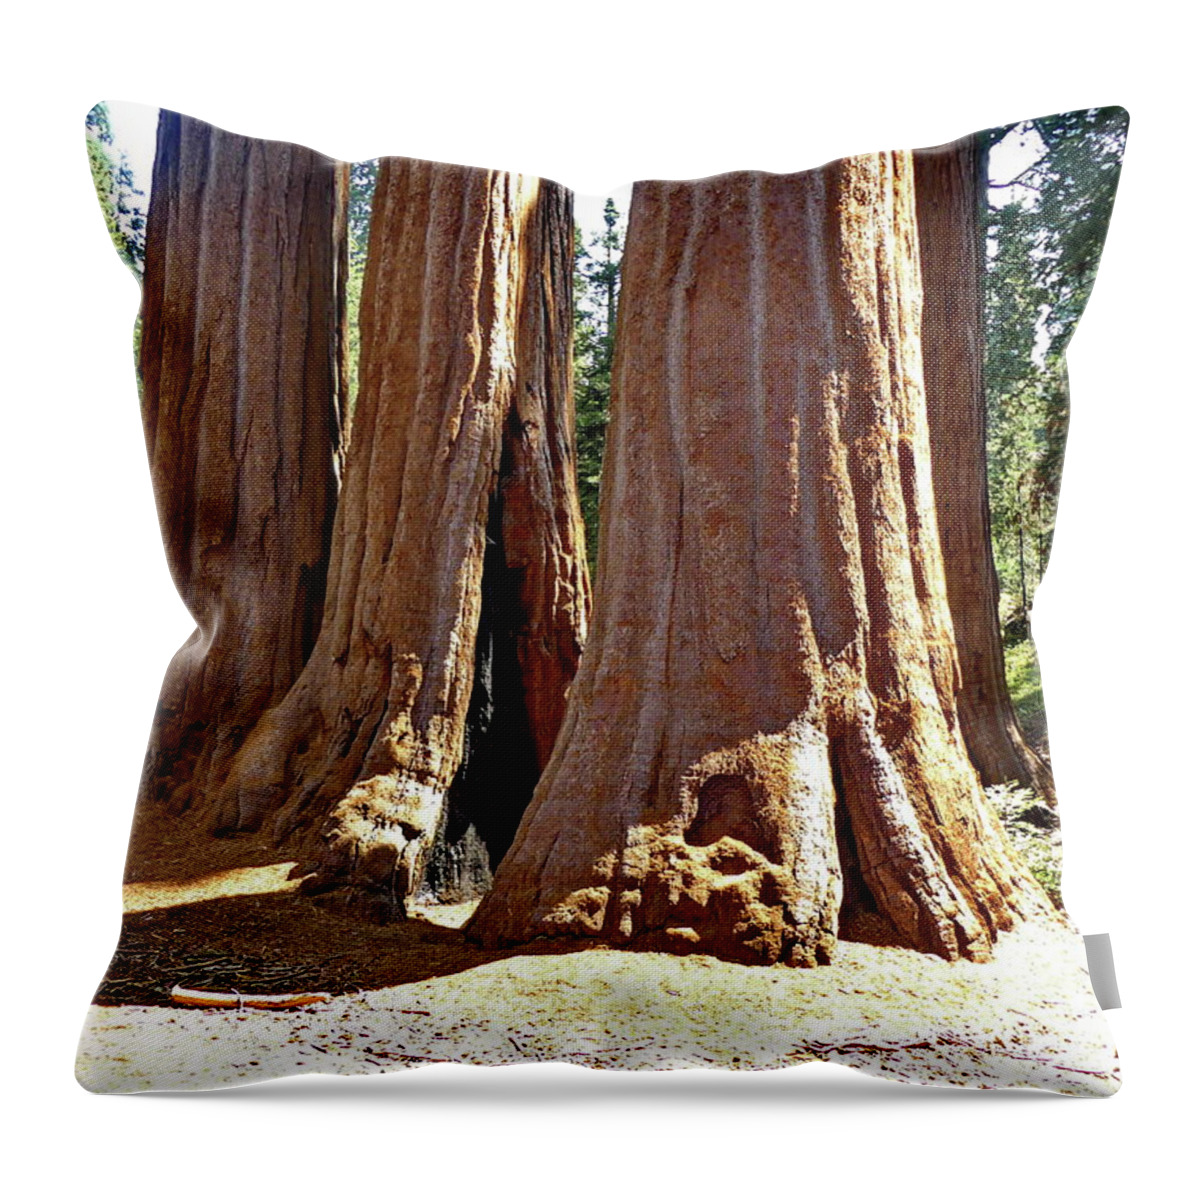 Sequoia Grove Throw Pillow featuring the photograph Giant Sequoia Grove by Lyuba Filatova